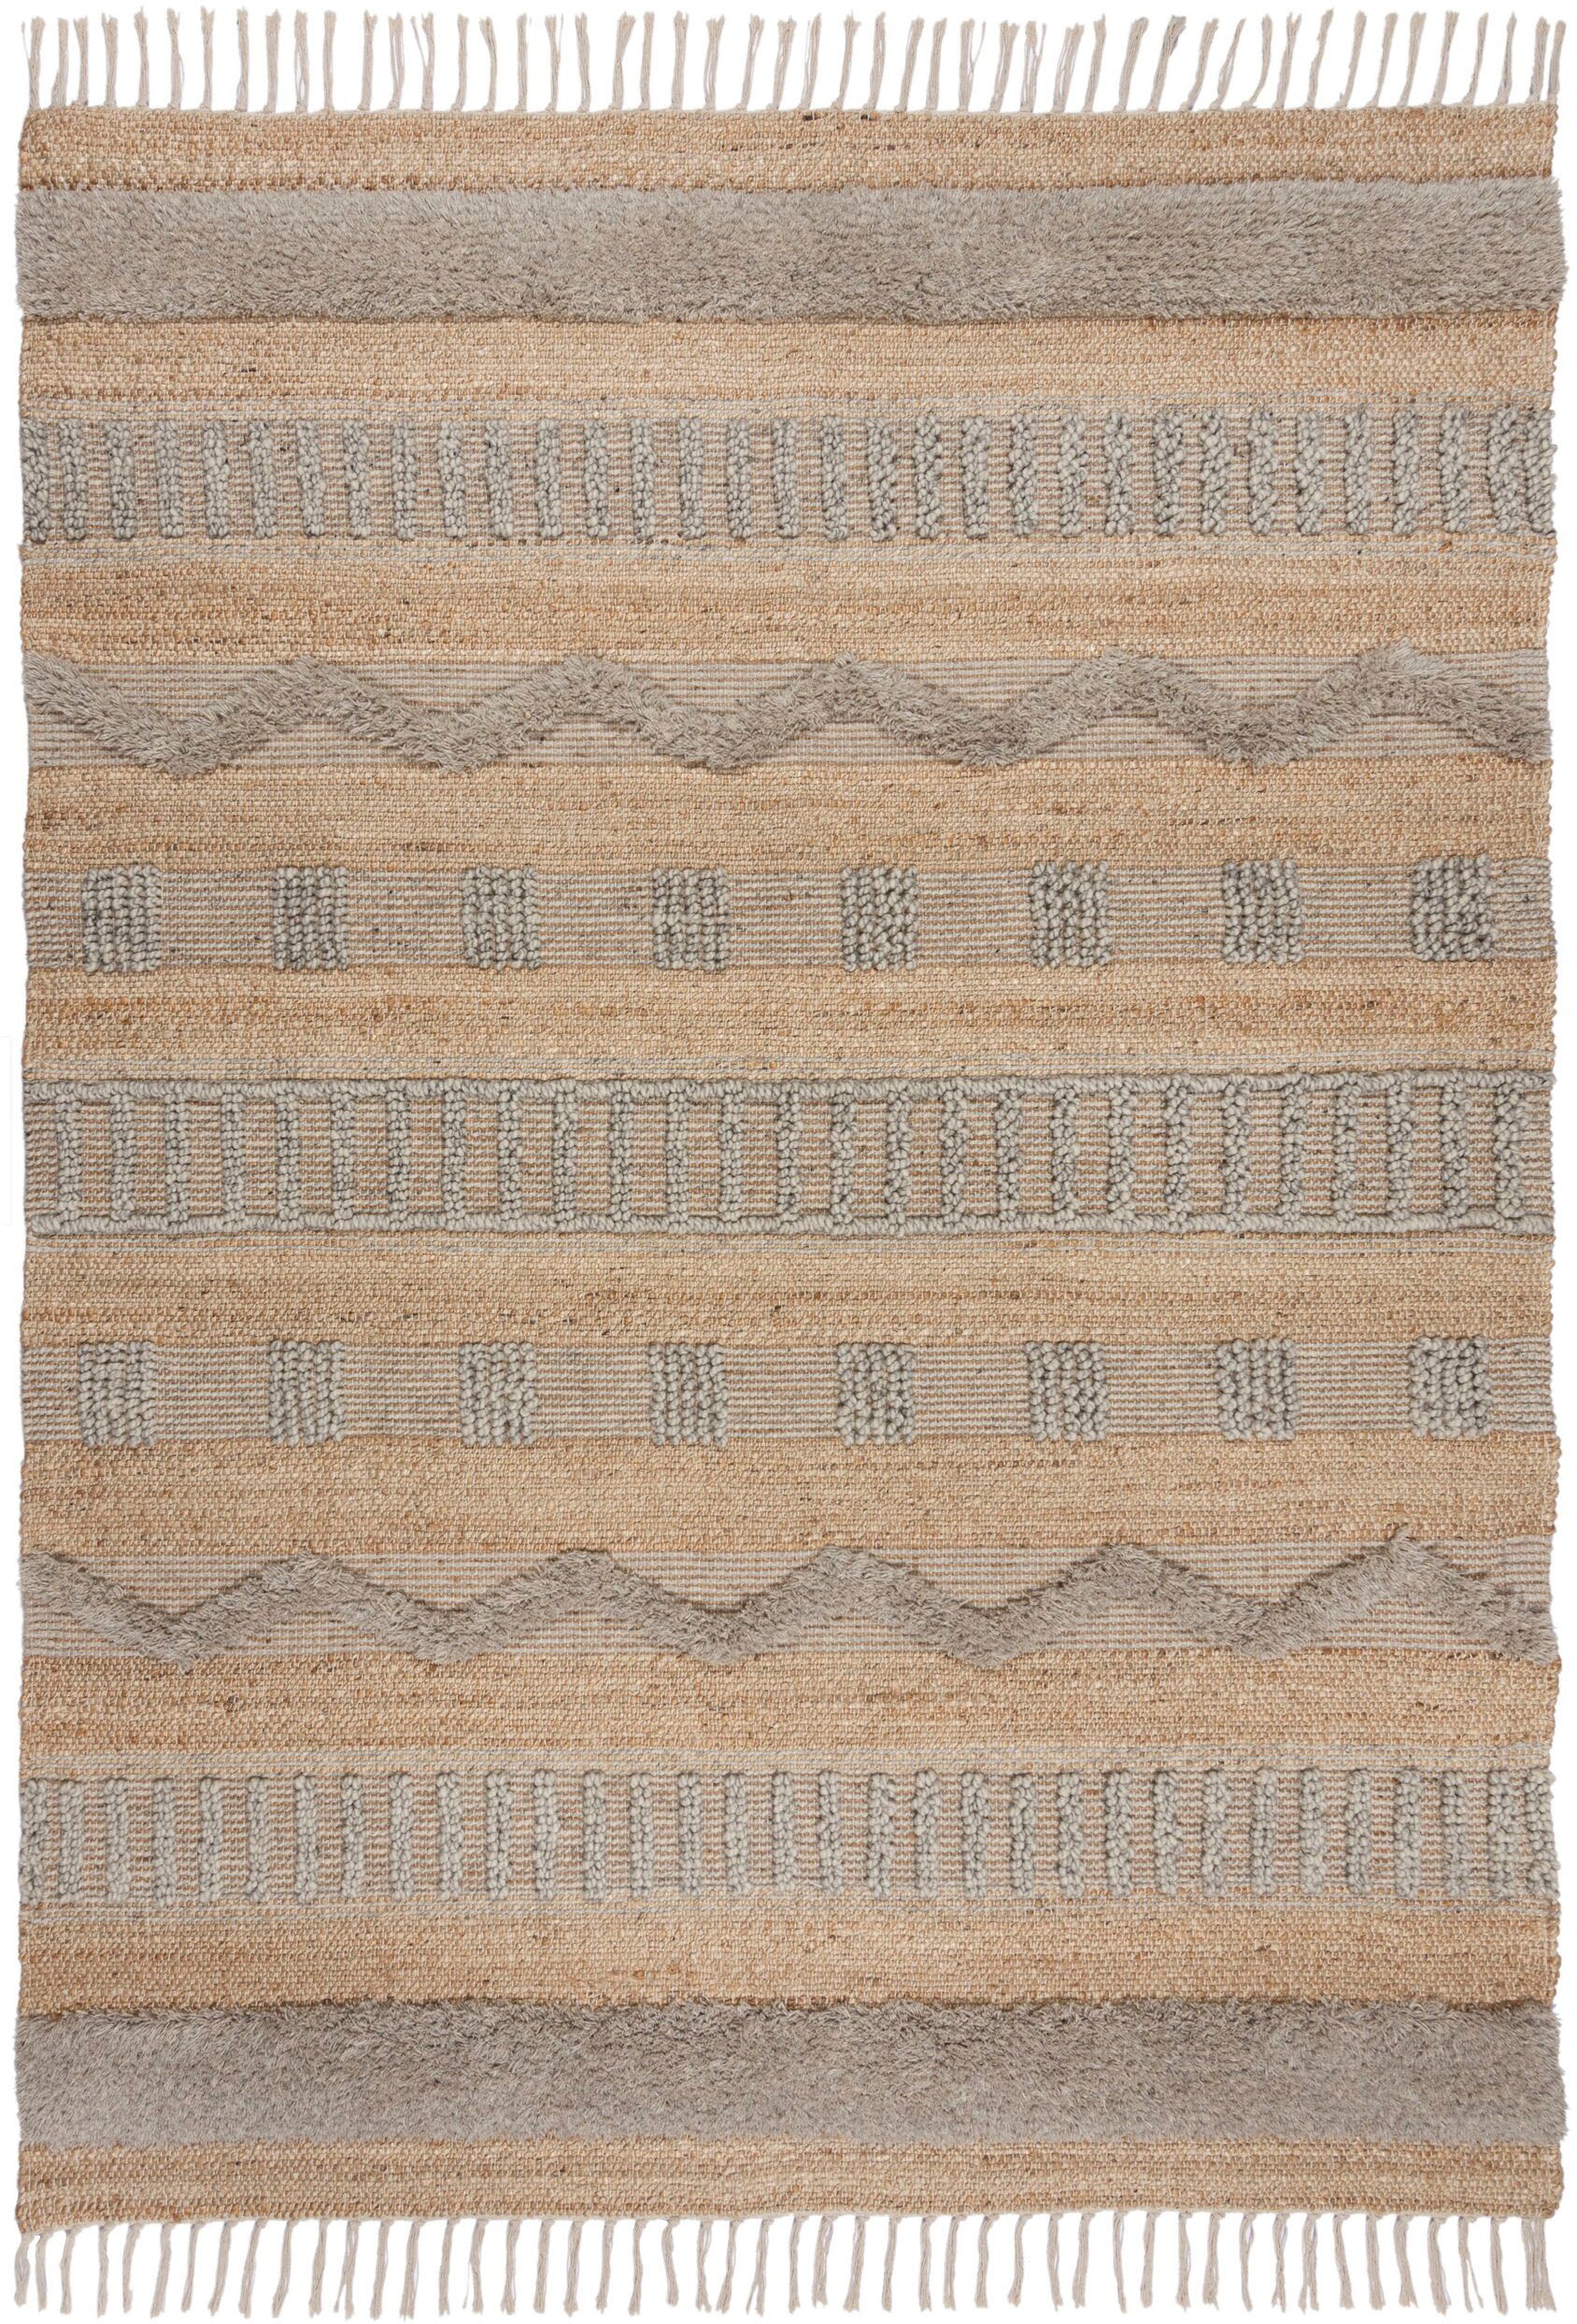 FLAIR RUGS Teppich »Medina«, rechteckig, Boho-Look, aus Naturfasern wie Wolle & Jute